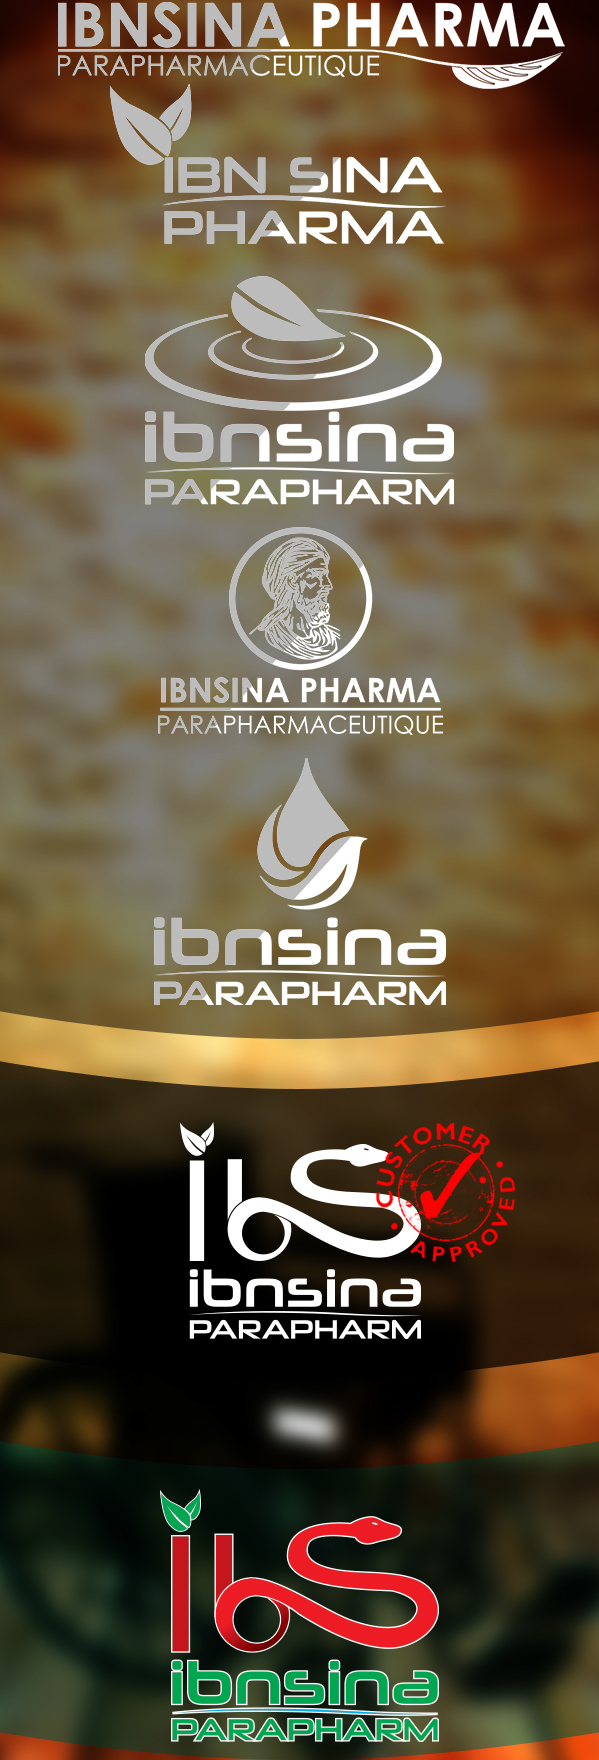 Logotype ibnsin parapharm parapharmacie